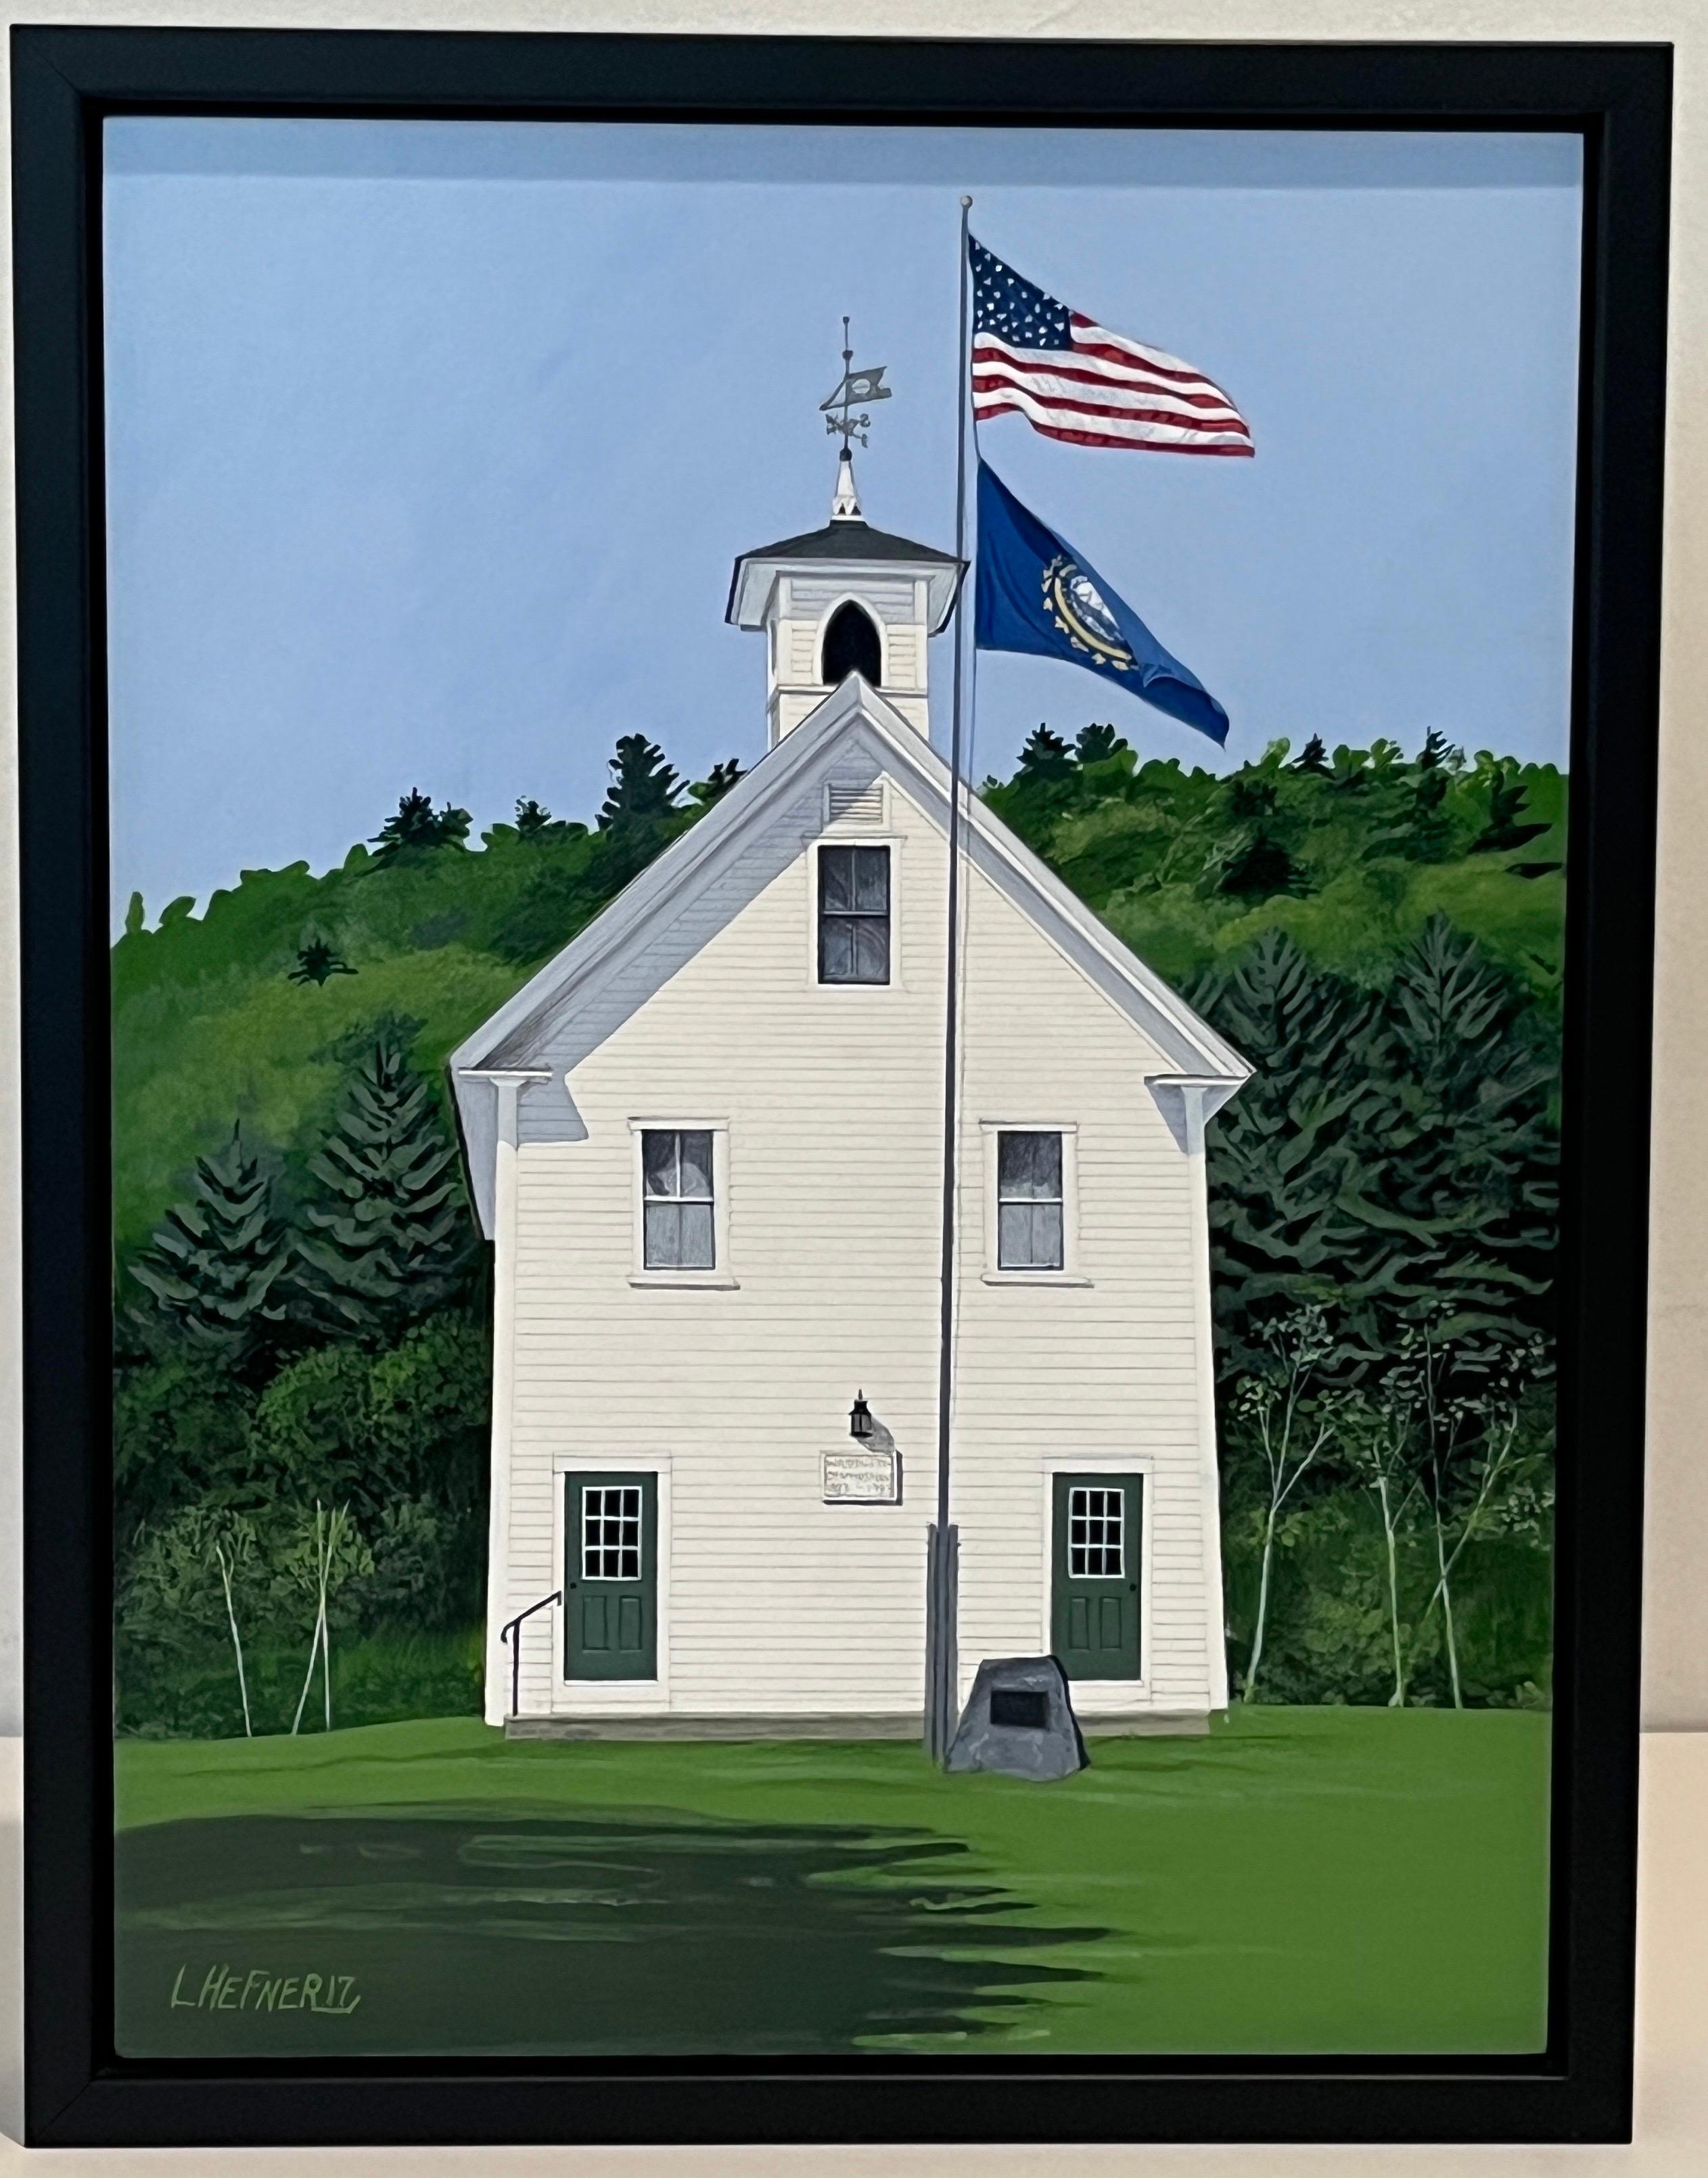 Washington, NH Schoolhouse - Painting by Linda Hefner